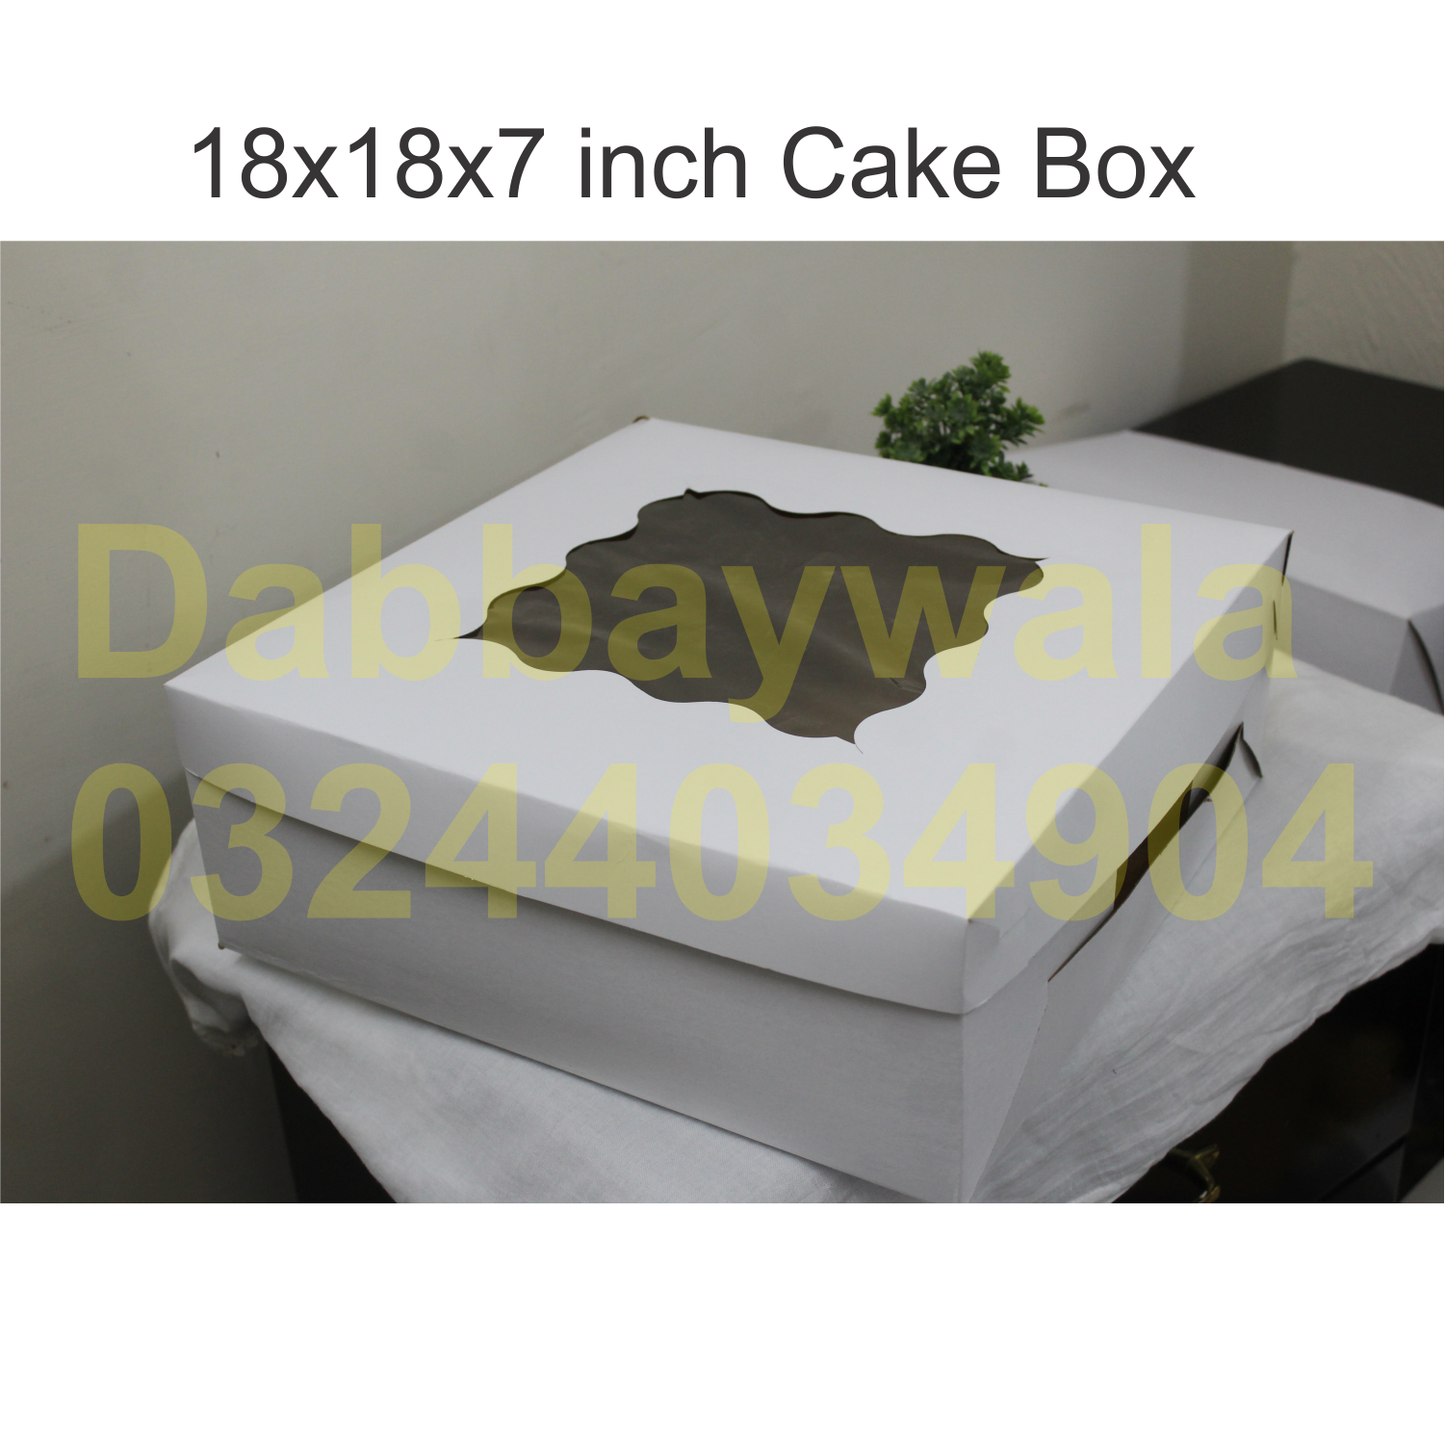 18x18x7 inch Cake Box